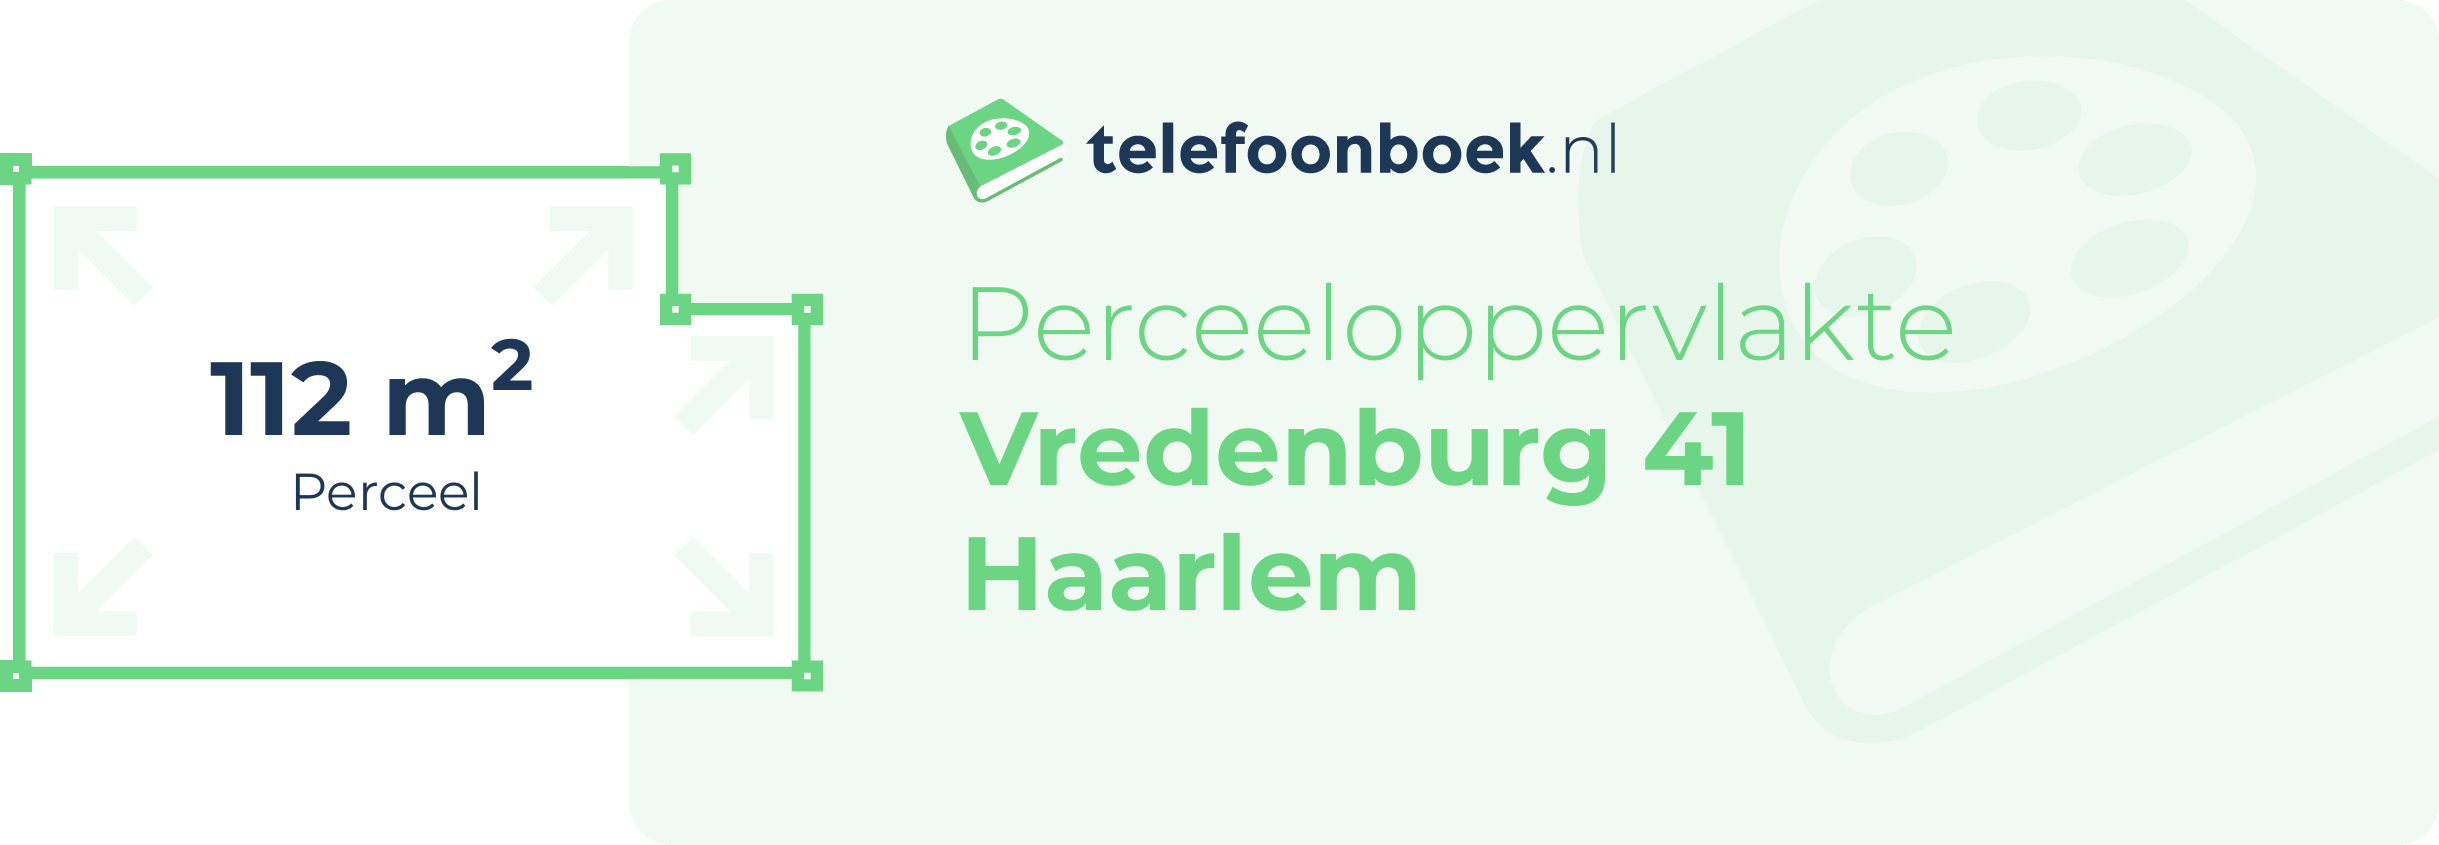 Perceeloppervlakte Vredenburg 41 Haarlem